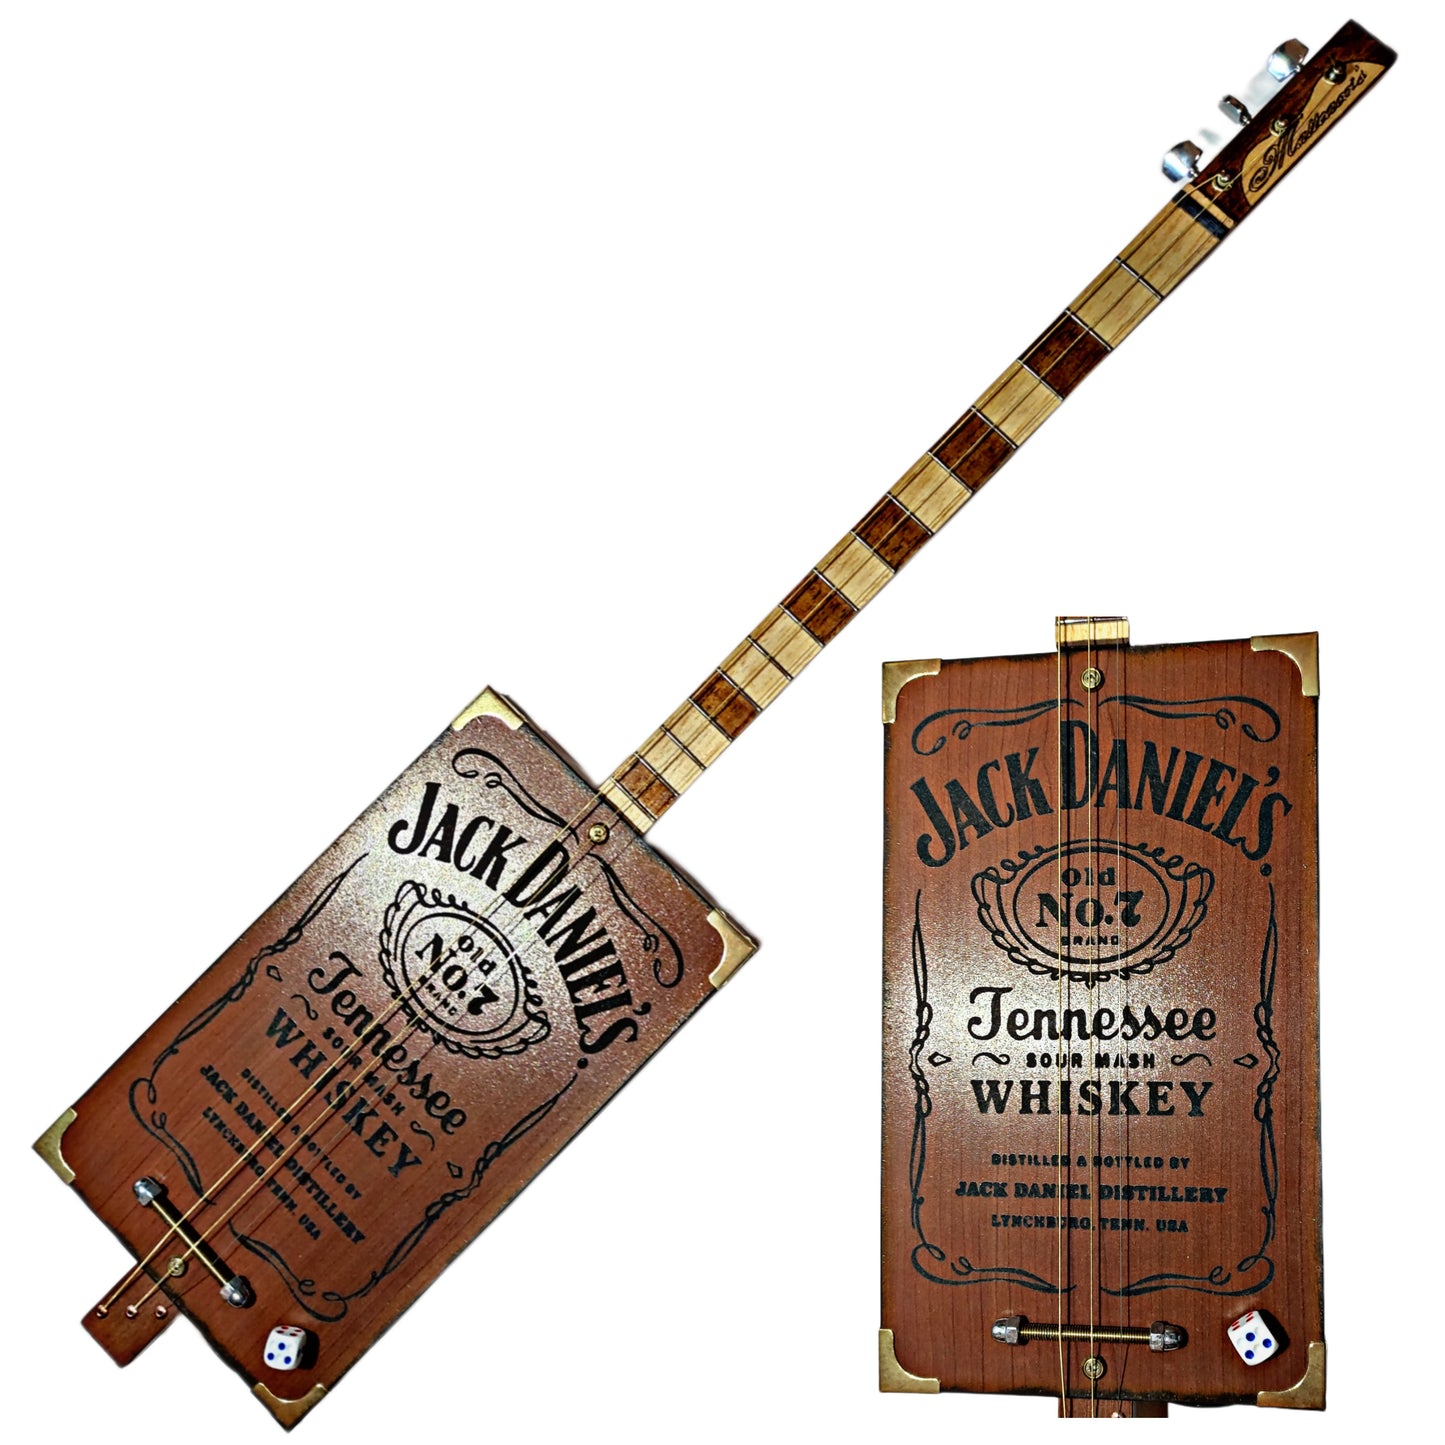 Hand made guitar Cigar Box Guitar Jack Daniel's 3tpv-ls Matteacci's Made in Italy